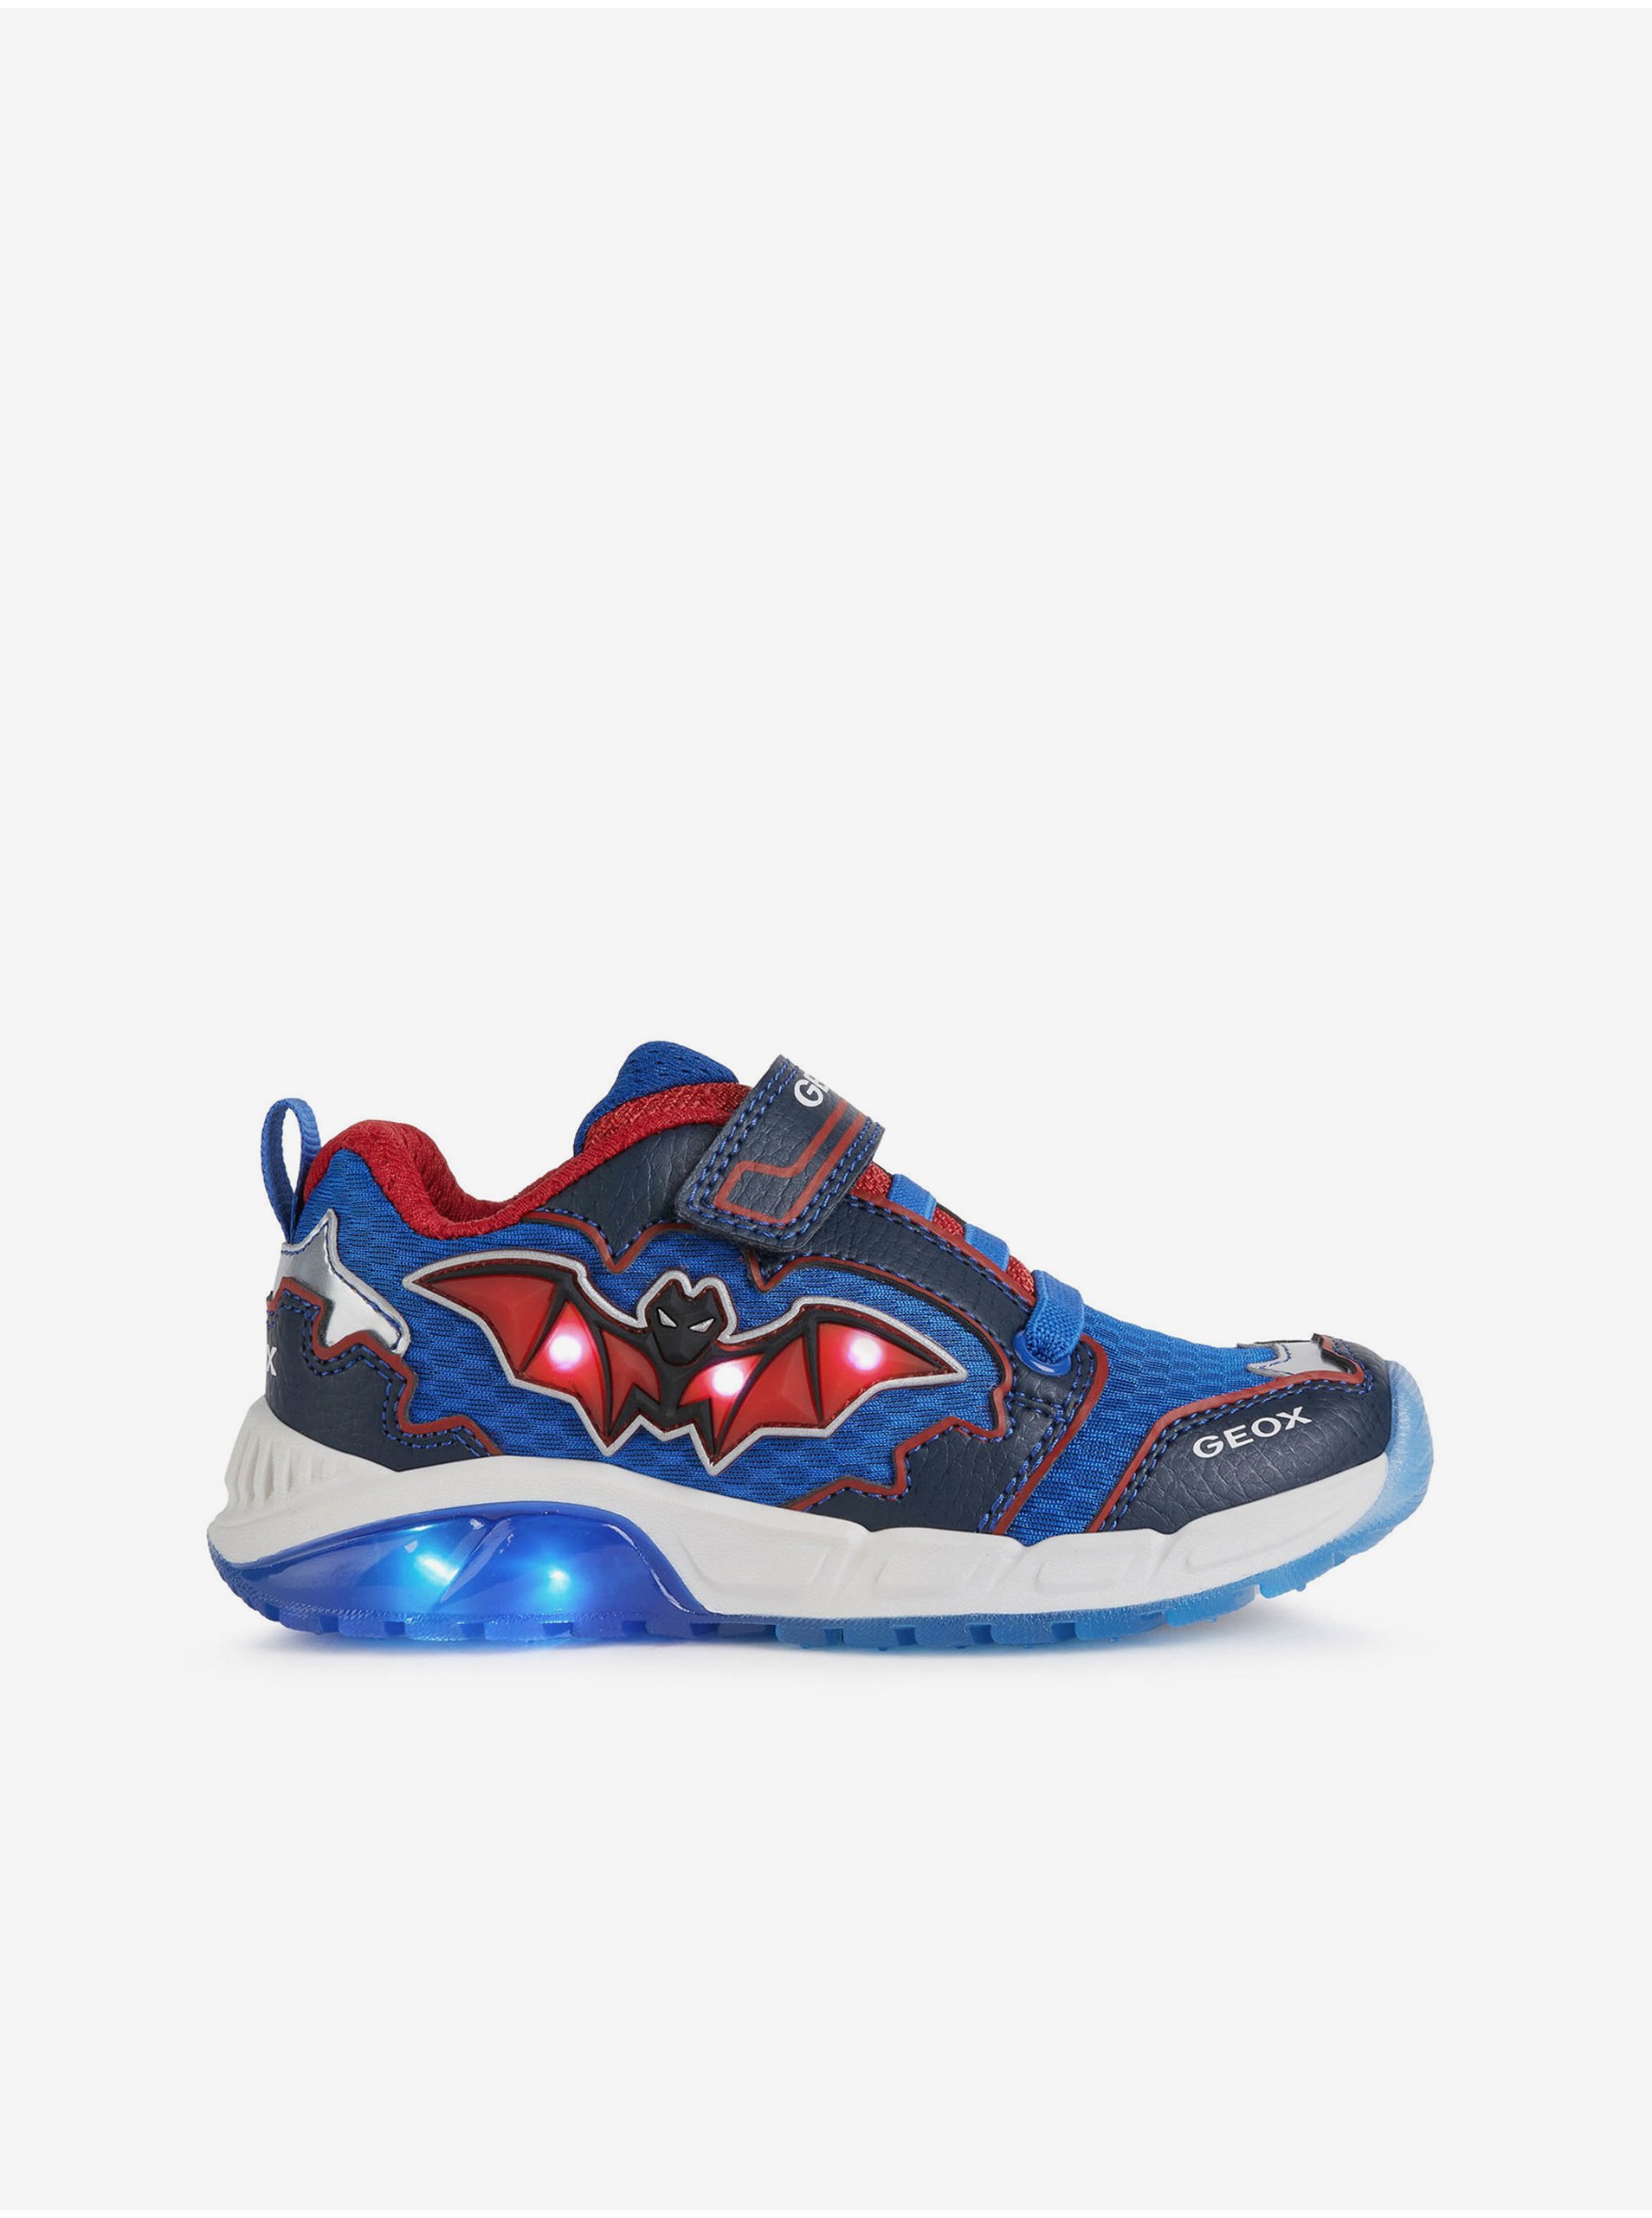 Lacno Červeno-modré chlapčenské topánky so svietiacou podrážkou Geox Spaziale